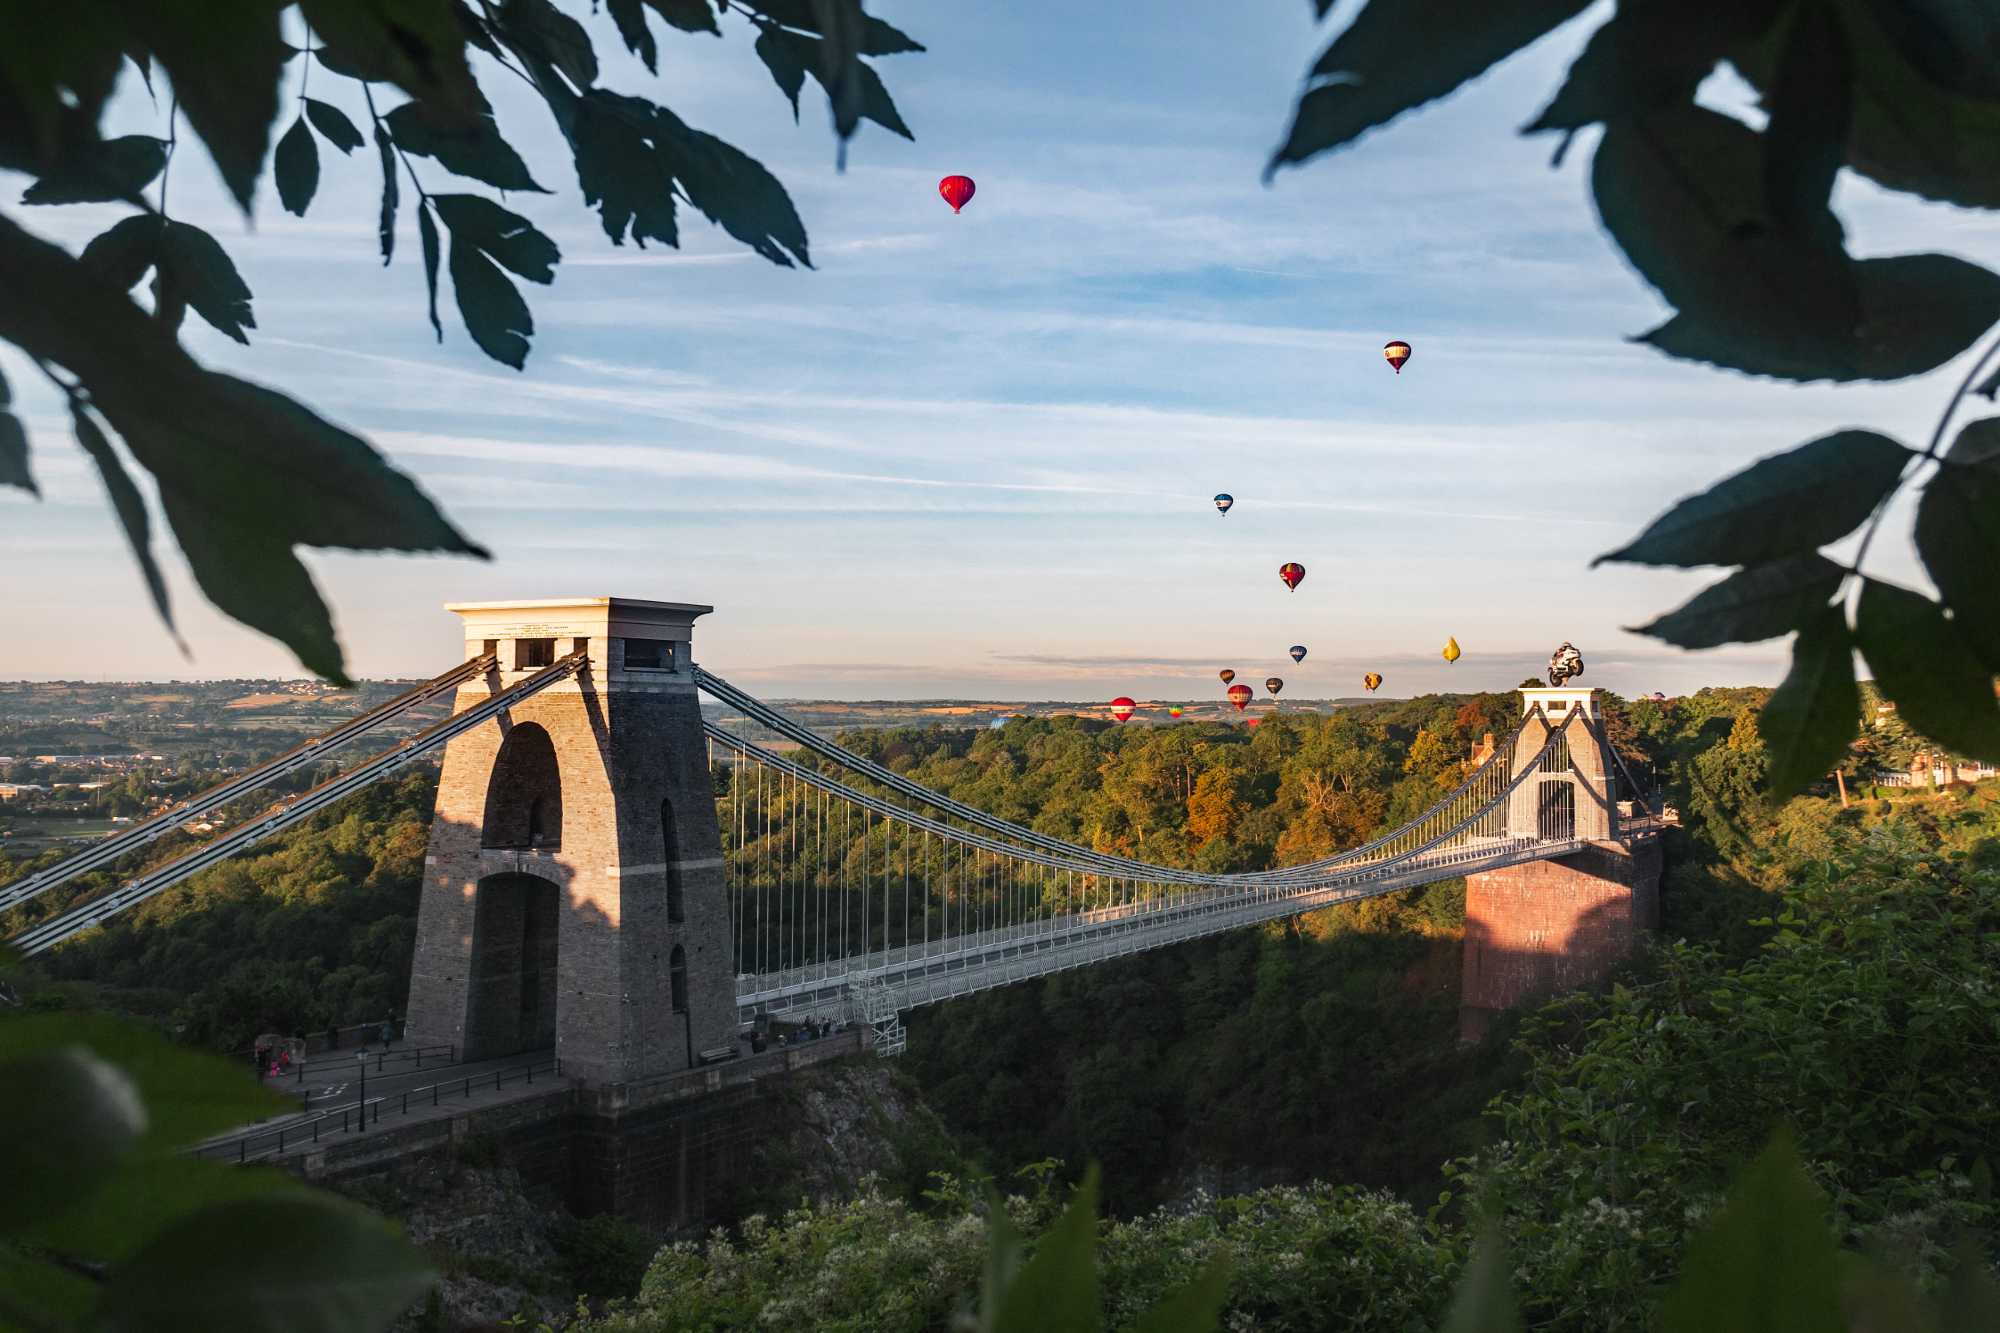 Hot air balloons over Clifton Suspension Bridge in Bristol